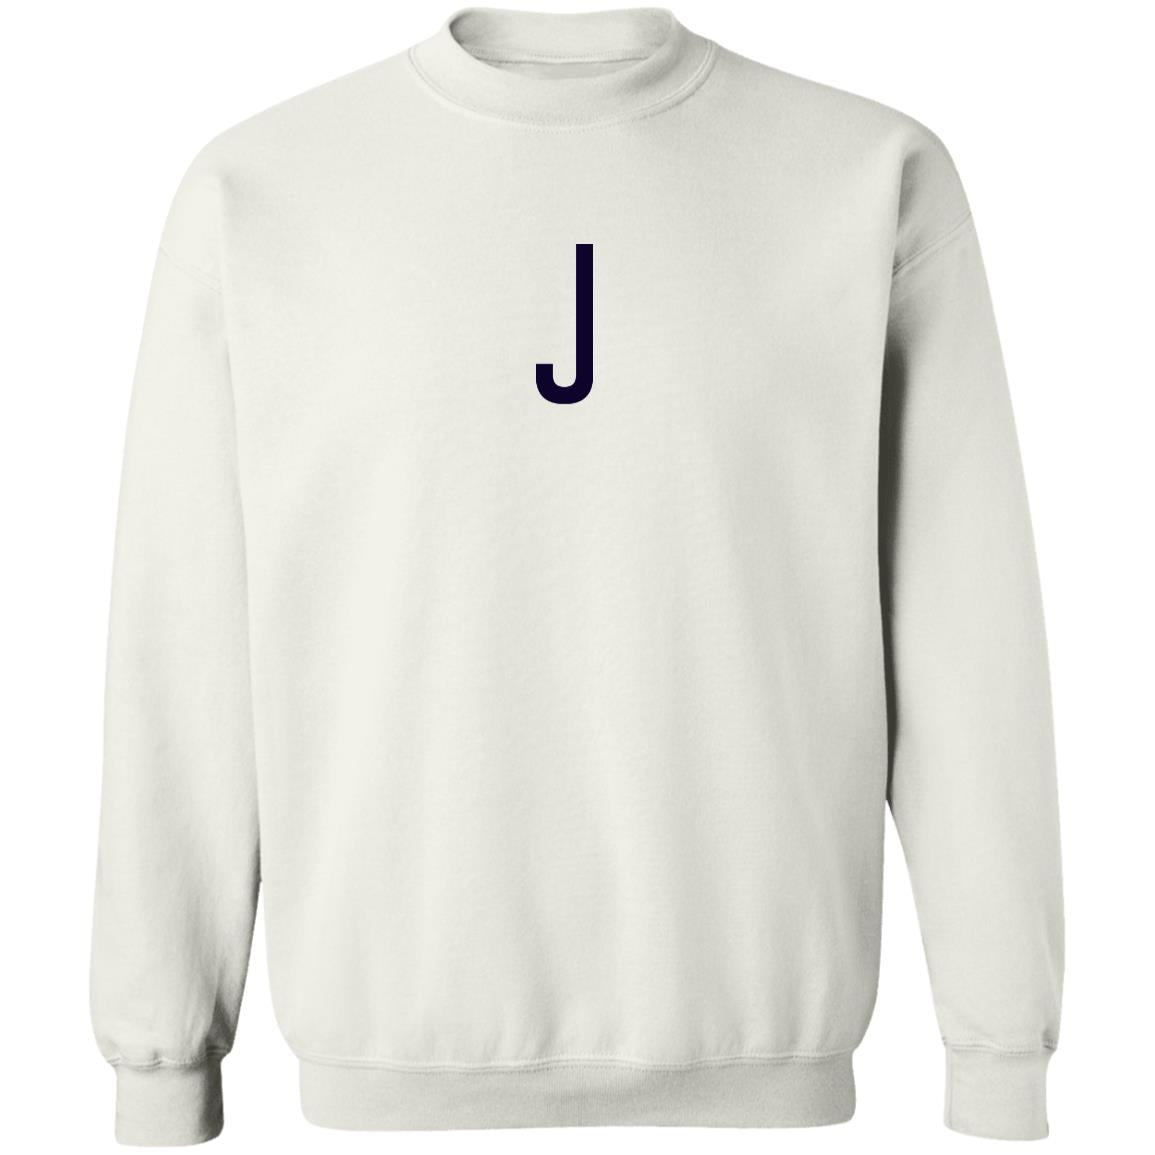 BTS 7th anniversary Sweatshirt Jin Crewneck Sweatshirt with letter